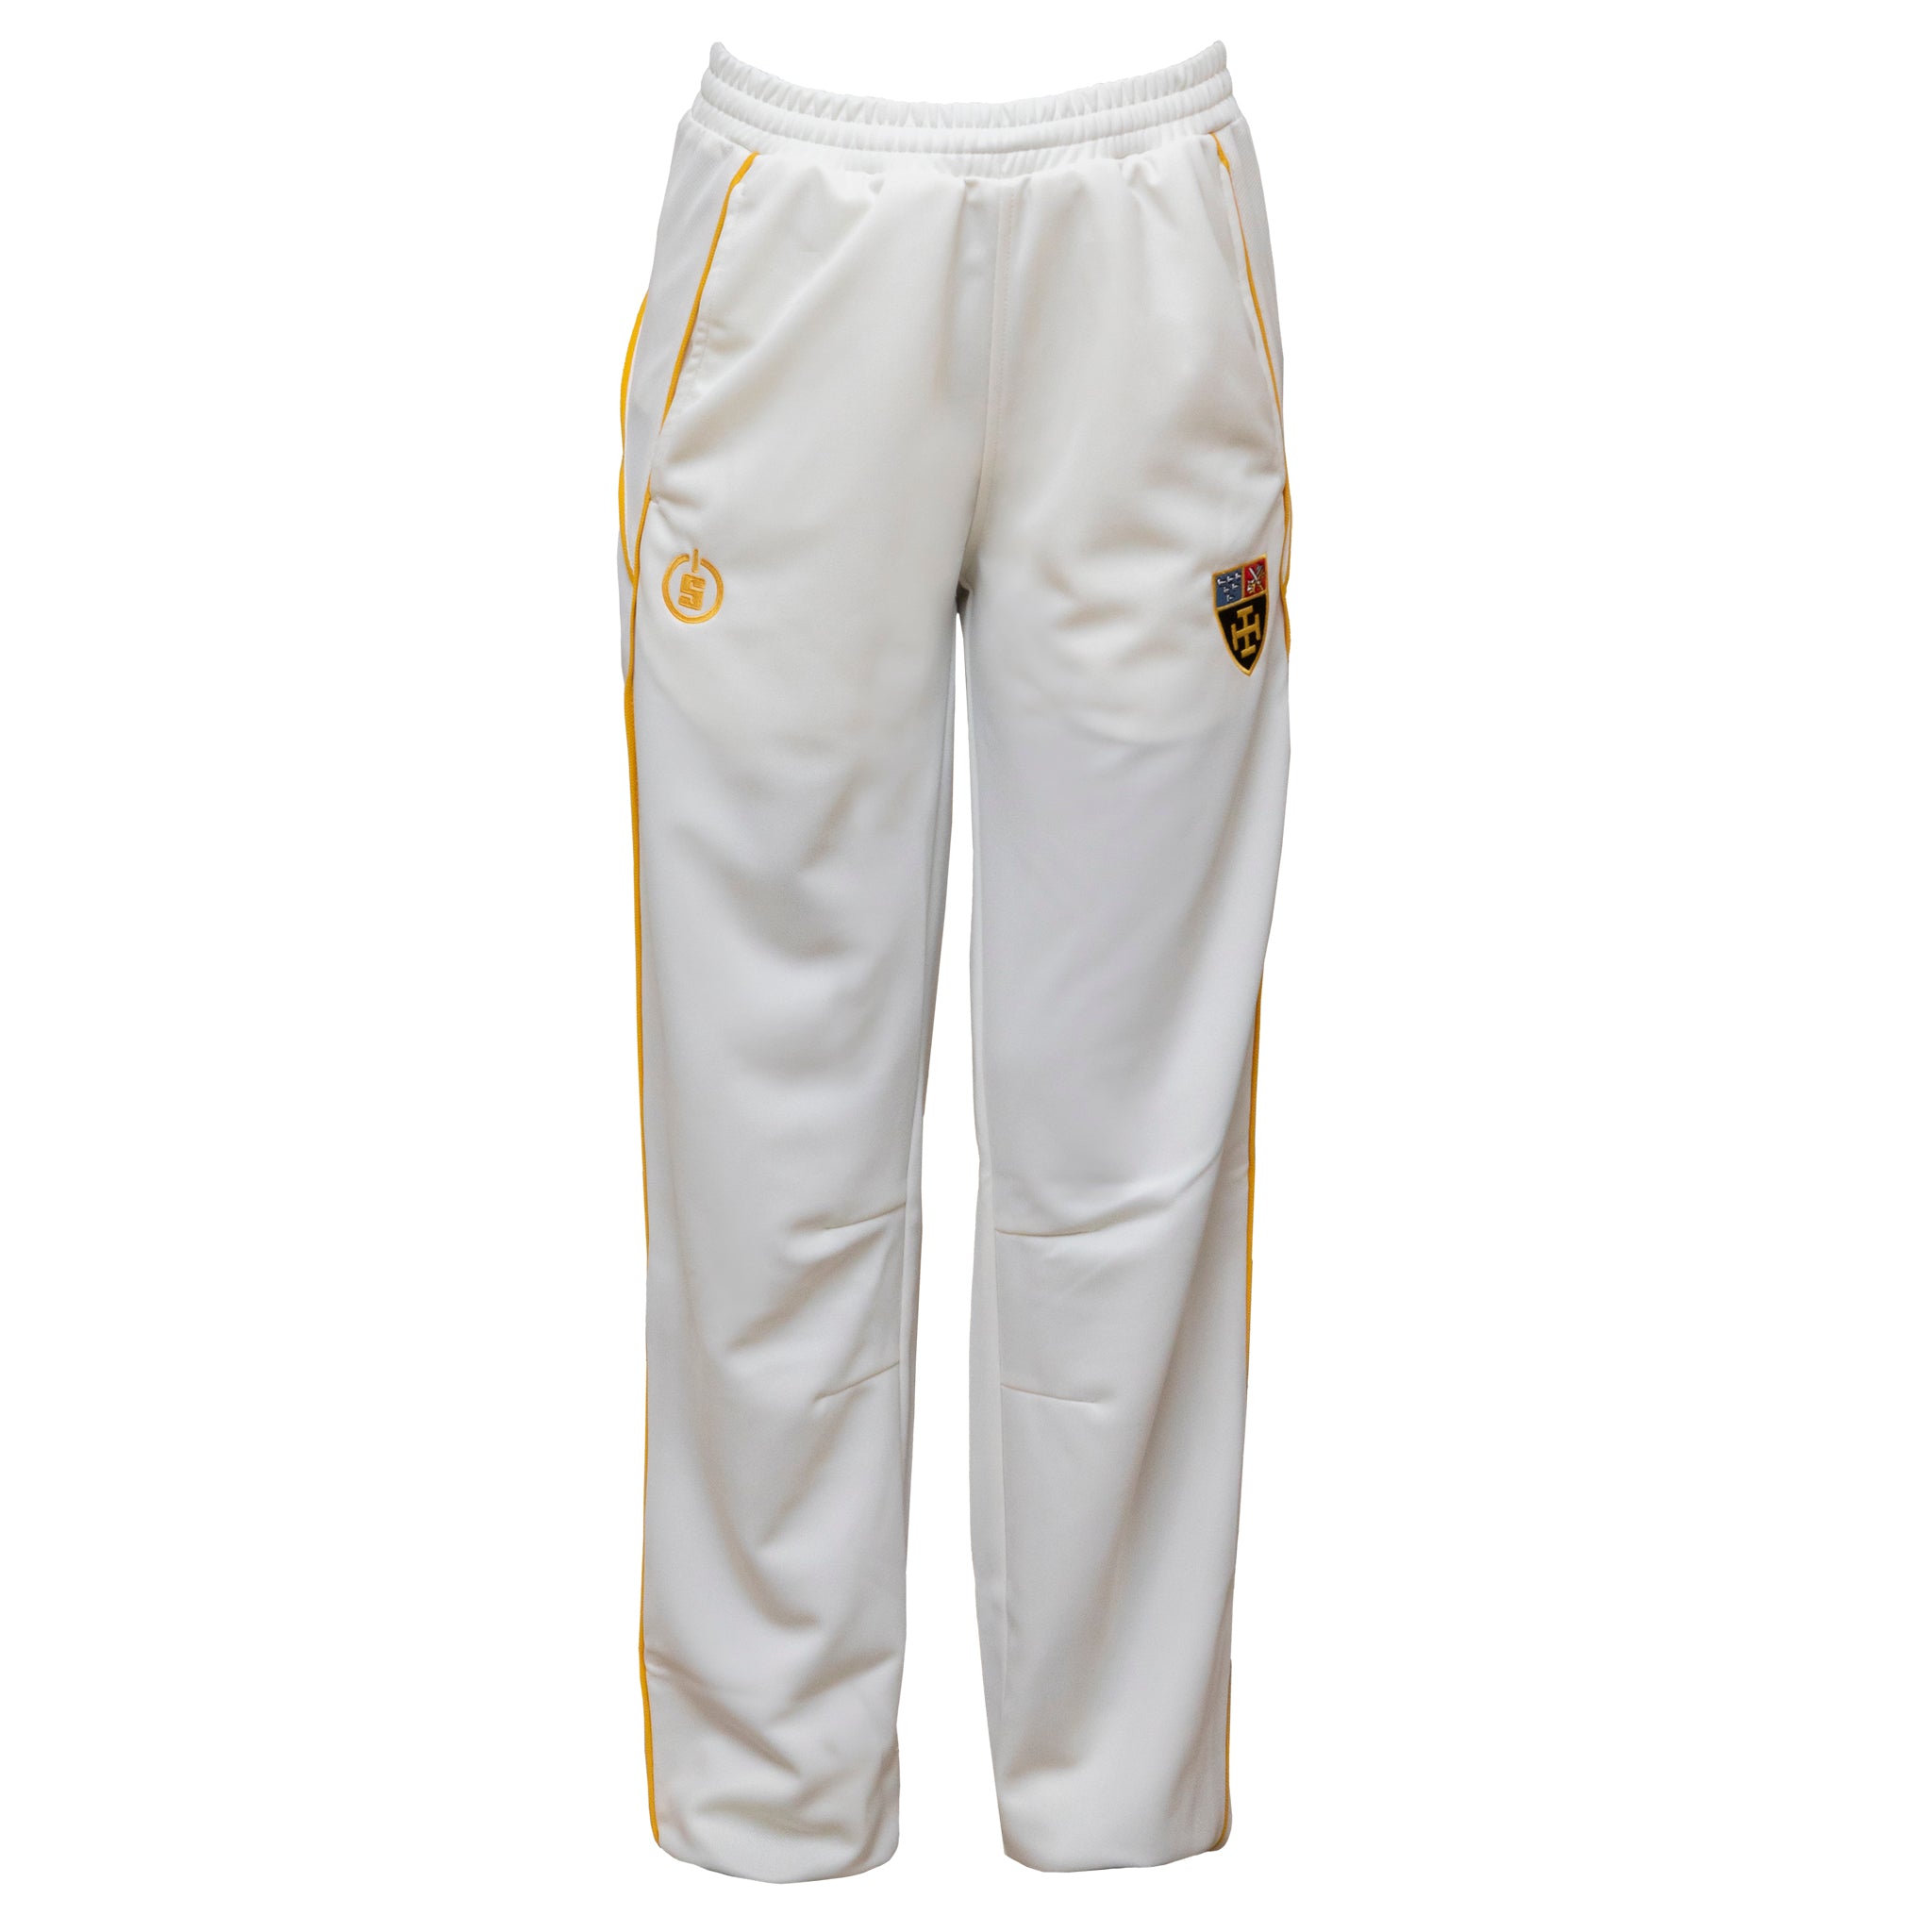 SG Premium Cricket Trouser, XXL (White) : Amazon.in: Clothing & Accessories